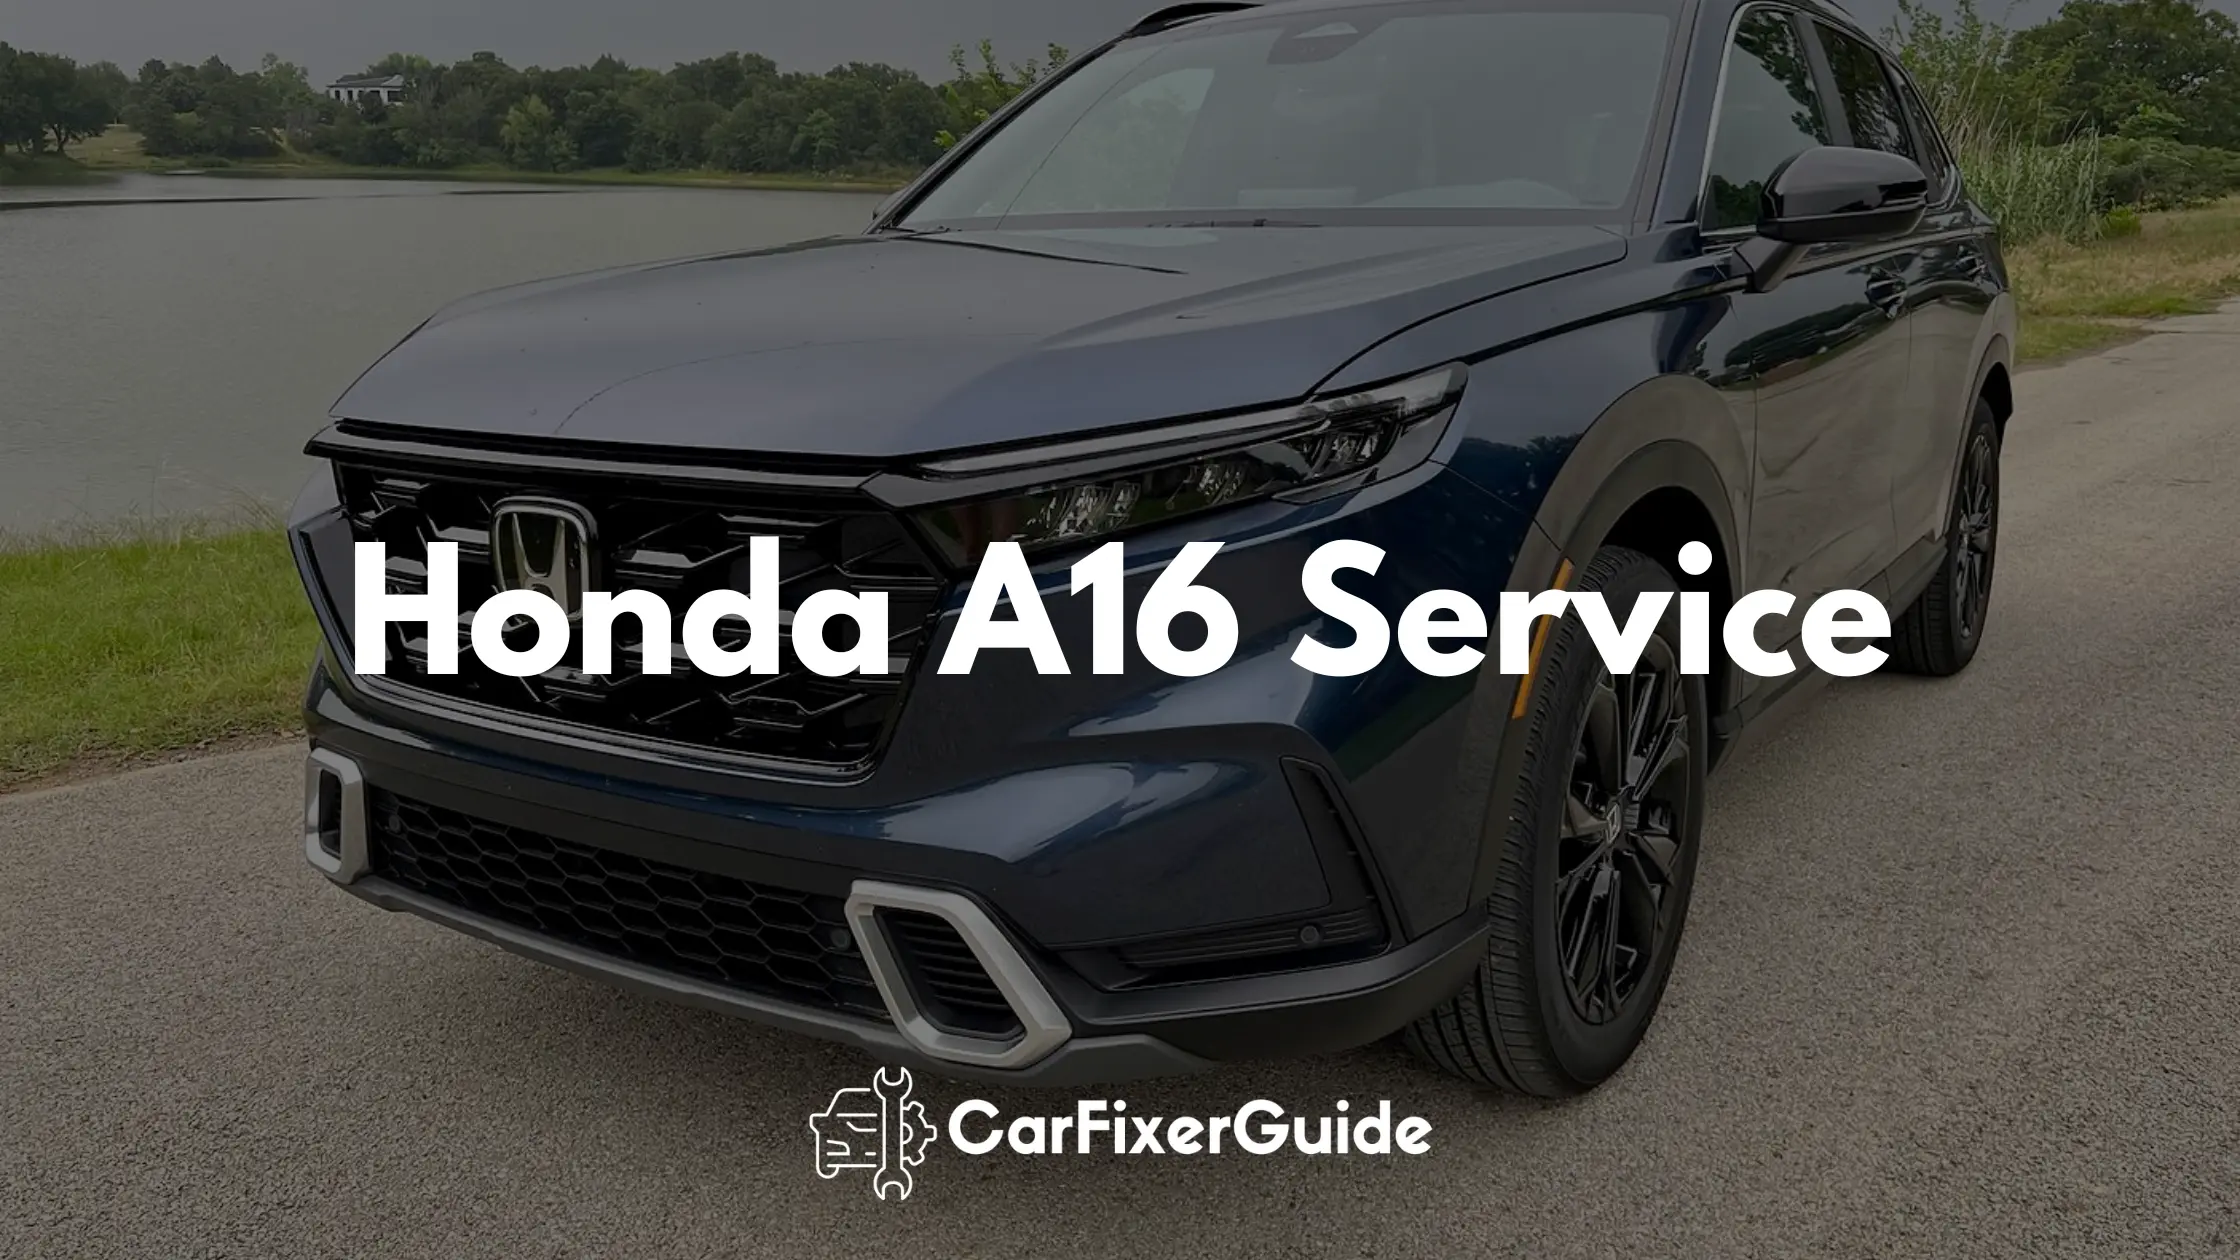 Honda A16 Service